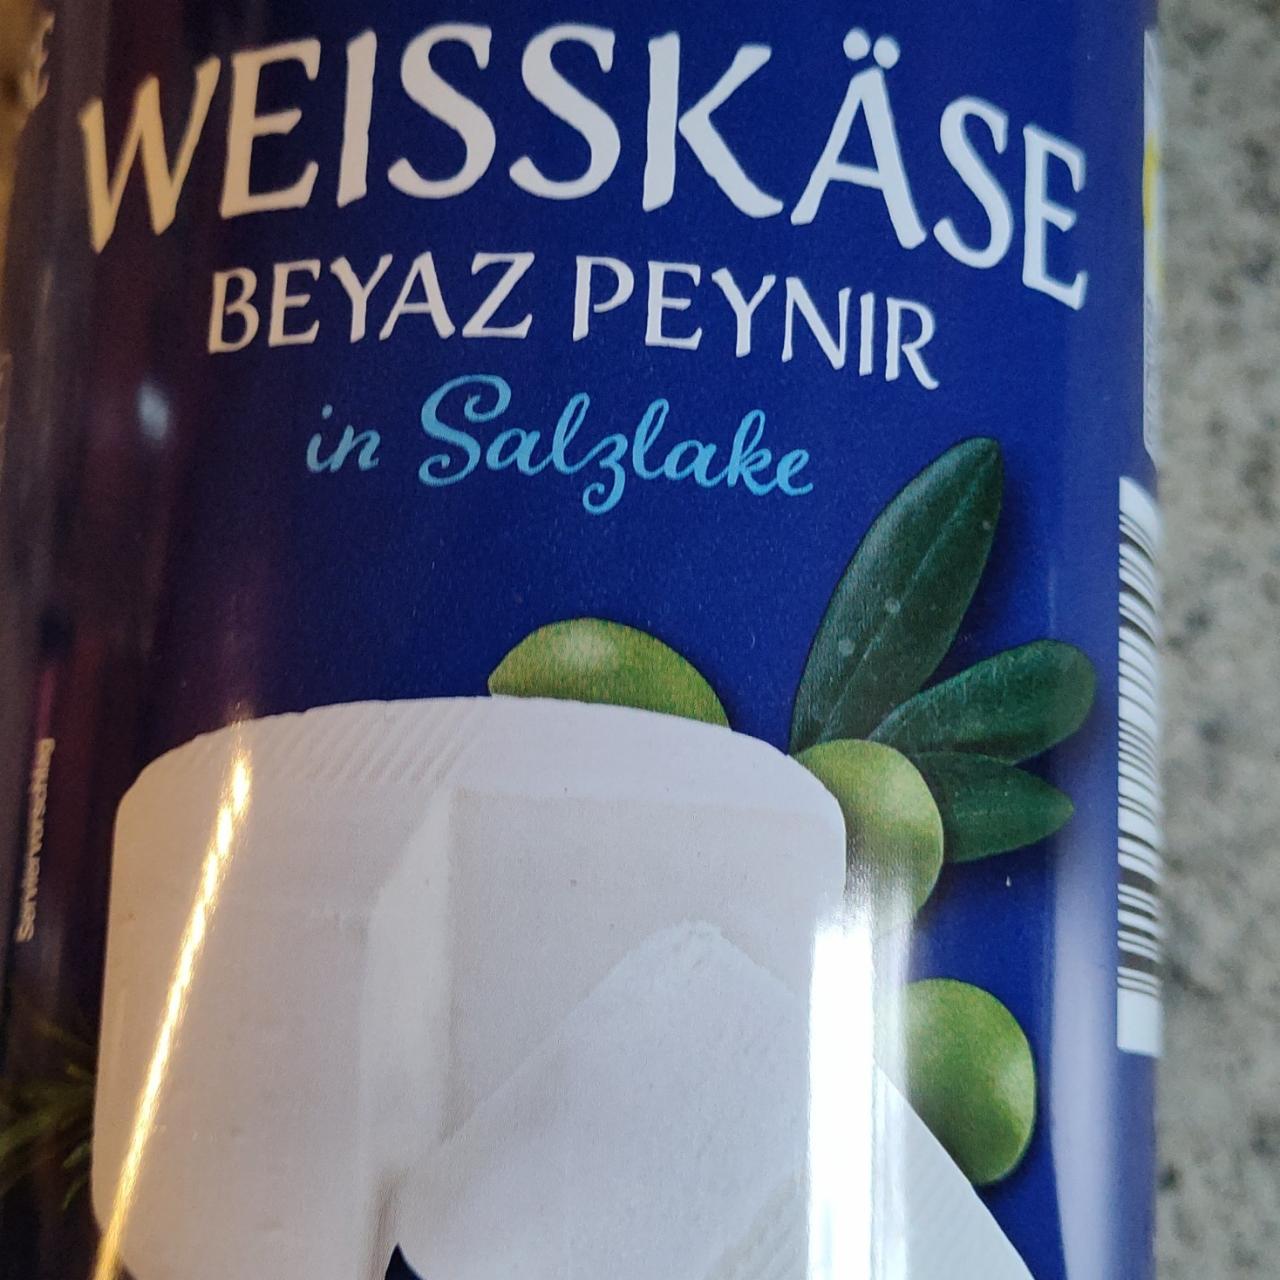 Fotografie - Weisskäse in Salzlake Beyaz Peynir